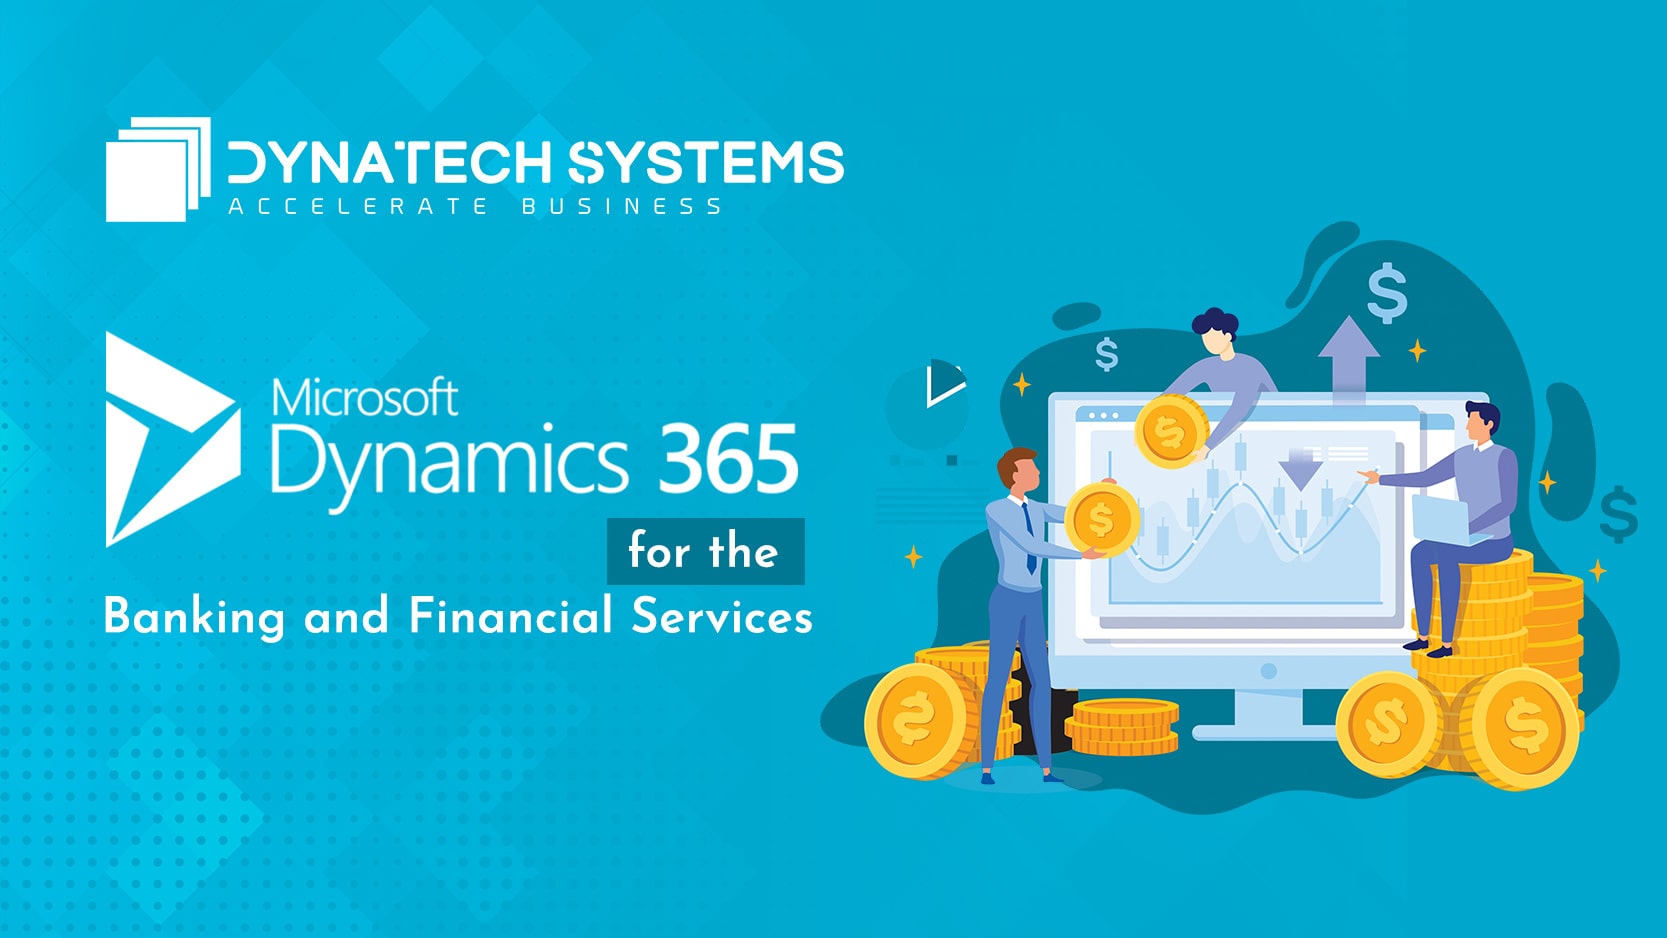 Guide to Microsoft Dynamics 365 Banking Accelerators